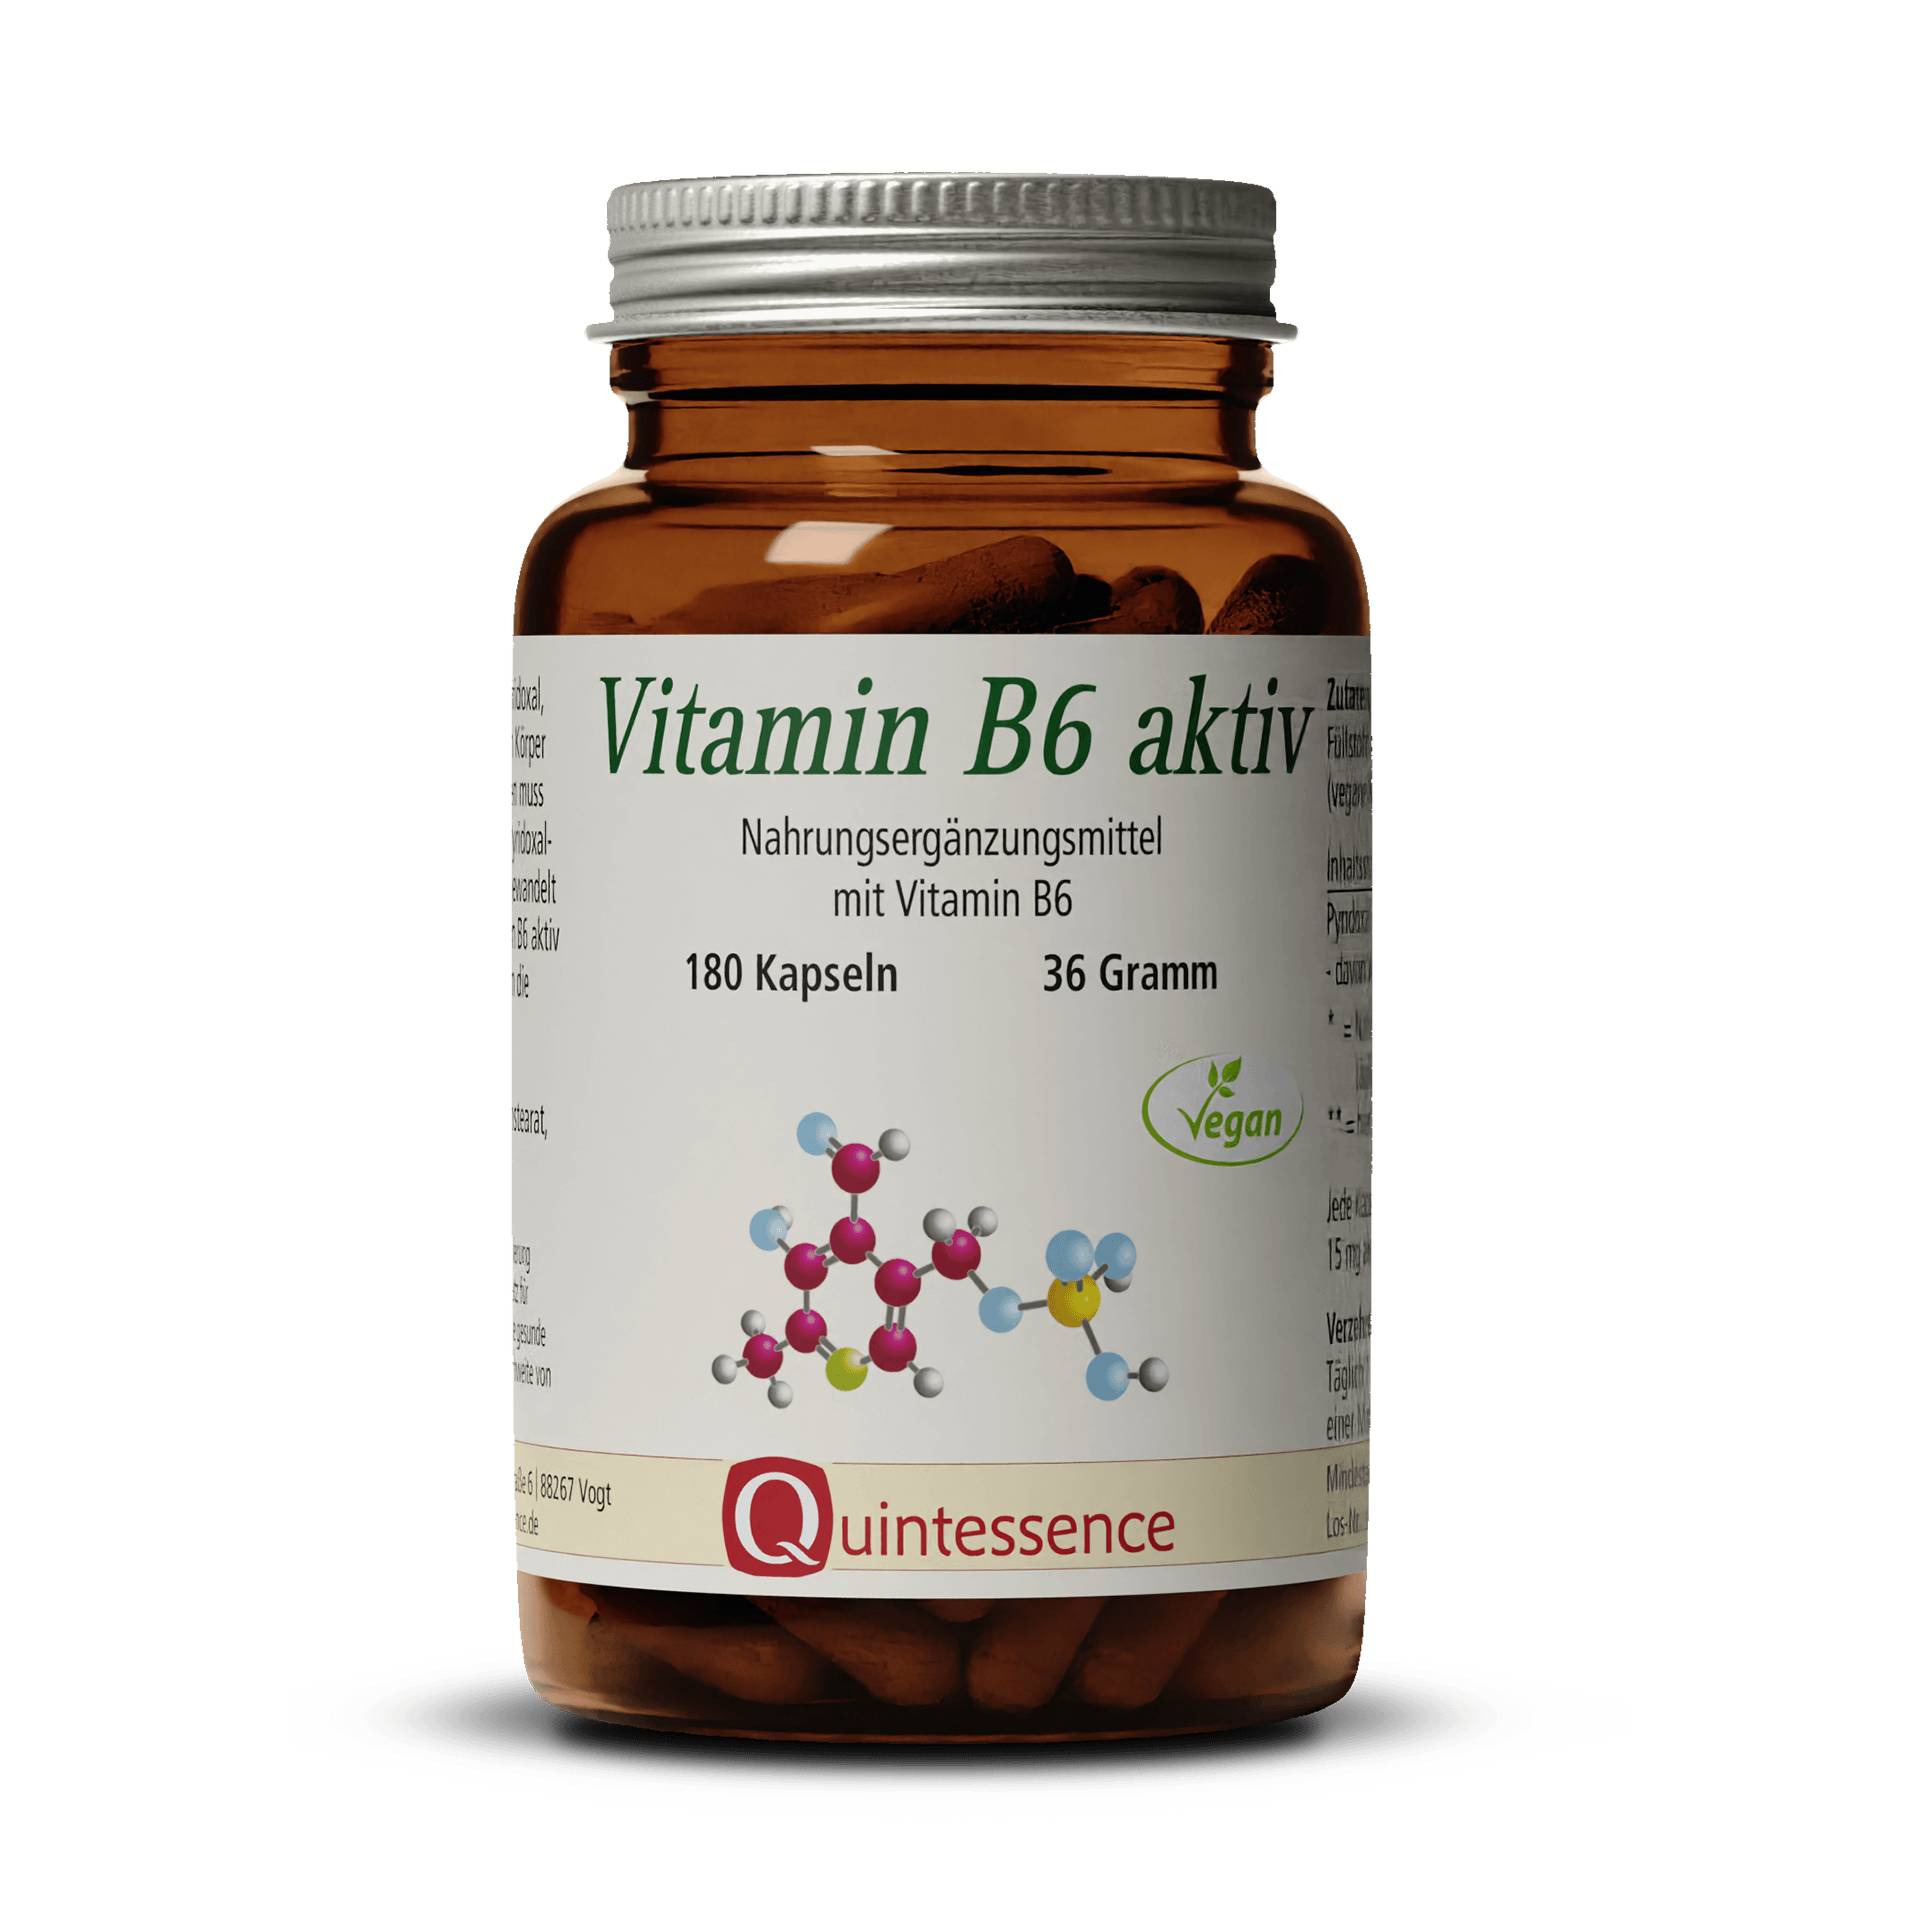 Vitamin B6 aktiv 180 Kapseln - Hochdosiertes Vitamin B6 in seiner aktiven Form - Vegan - Quintessence von Quintessence